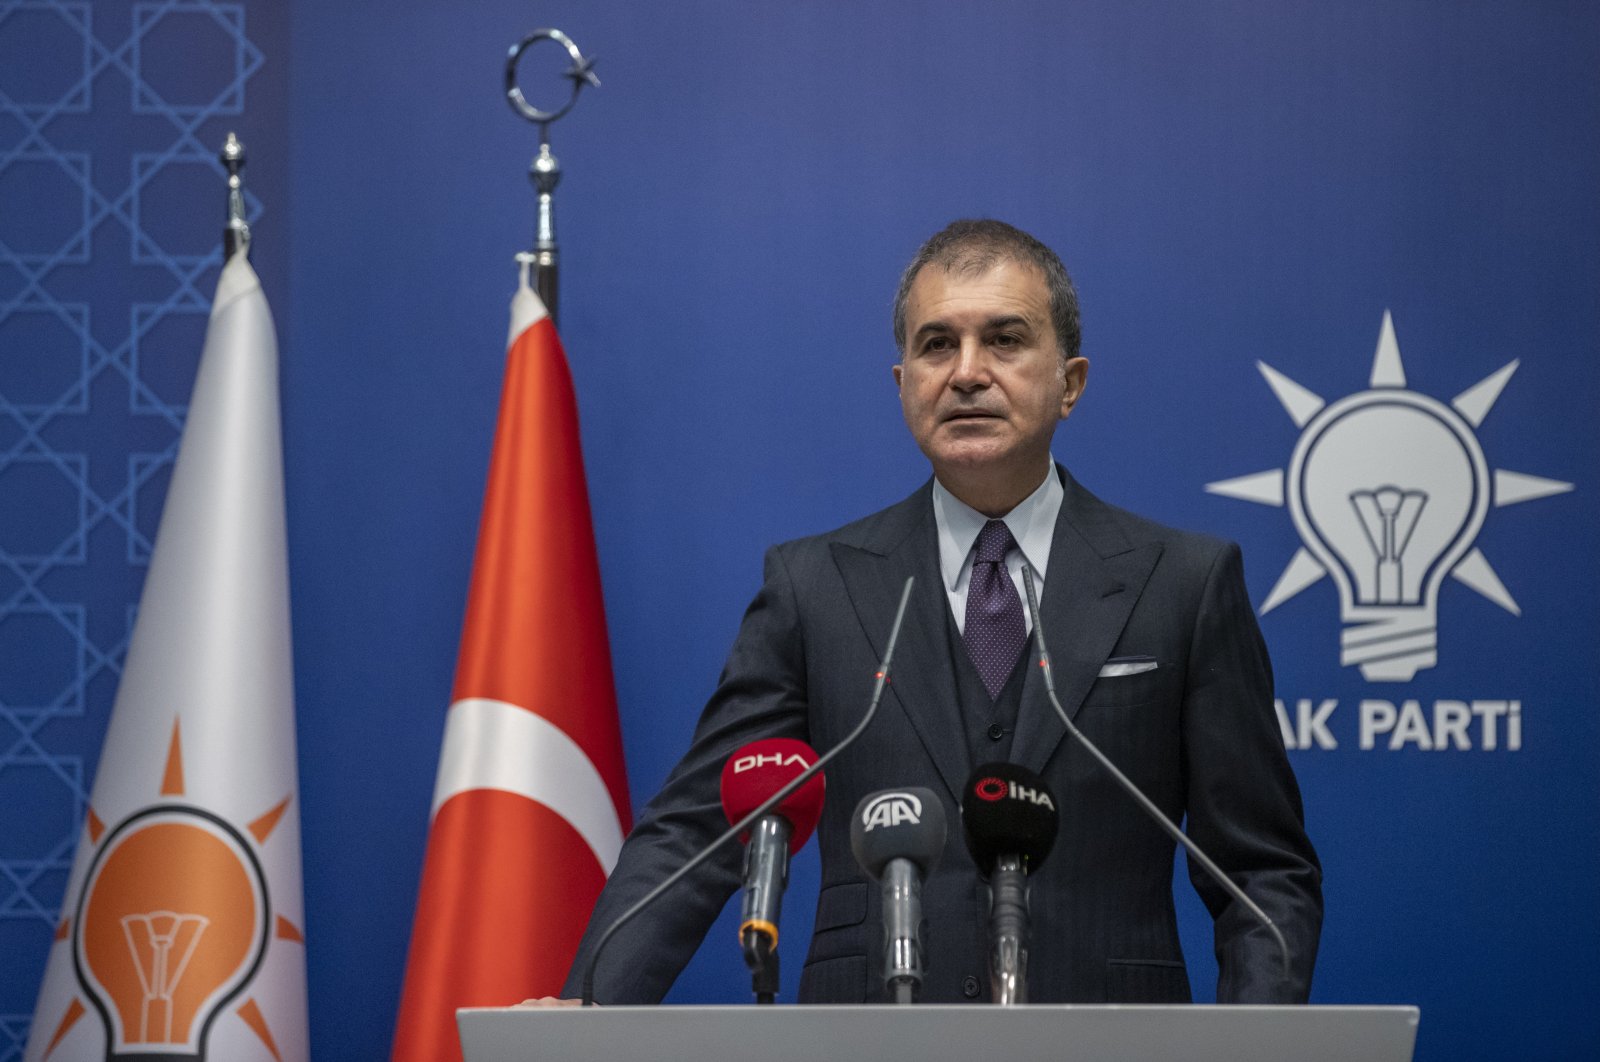 AK Party spokesperson Ömer Çelik speaks at a news conference, Dec. 12, 2020. (AA Photo)